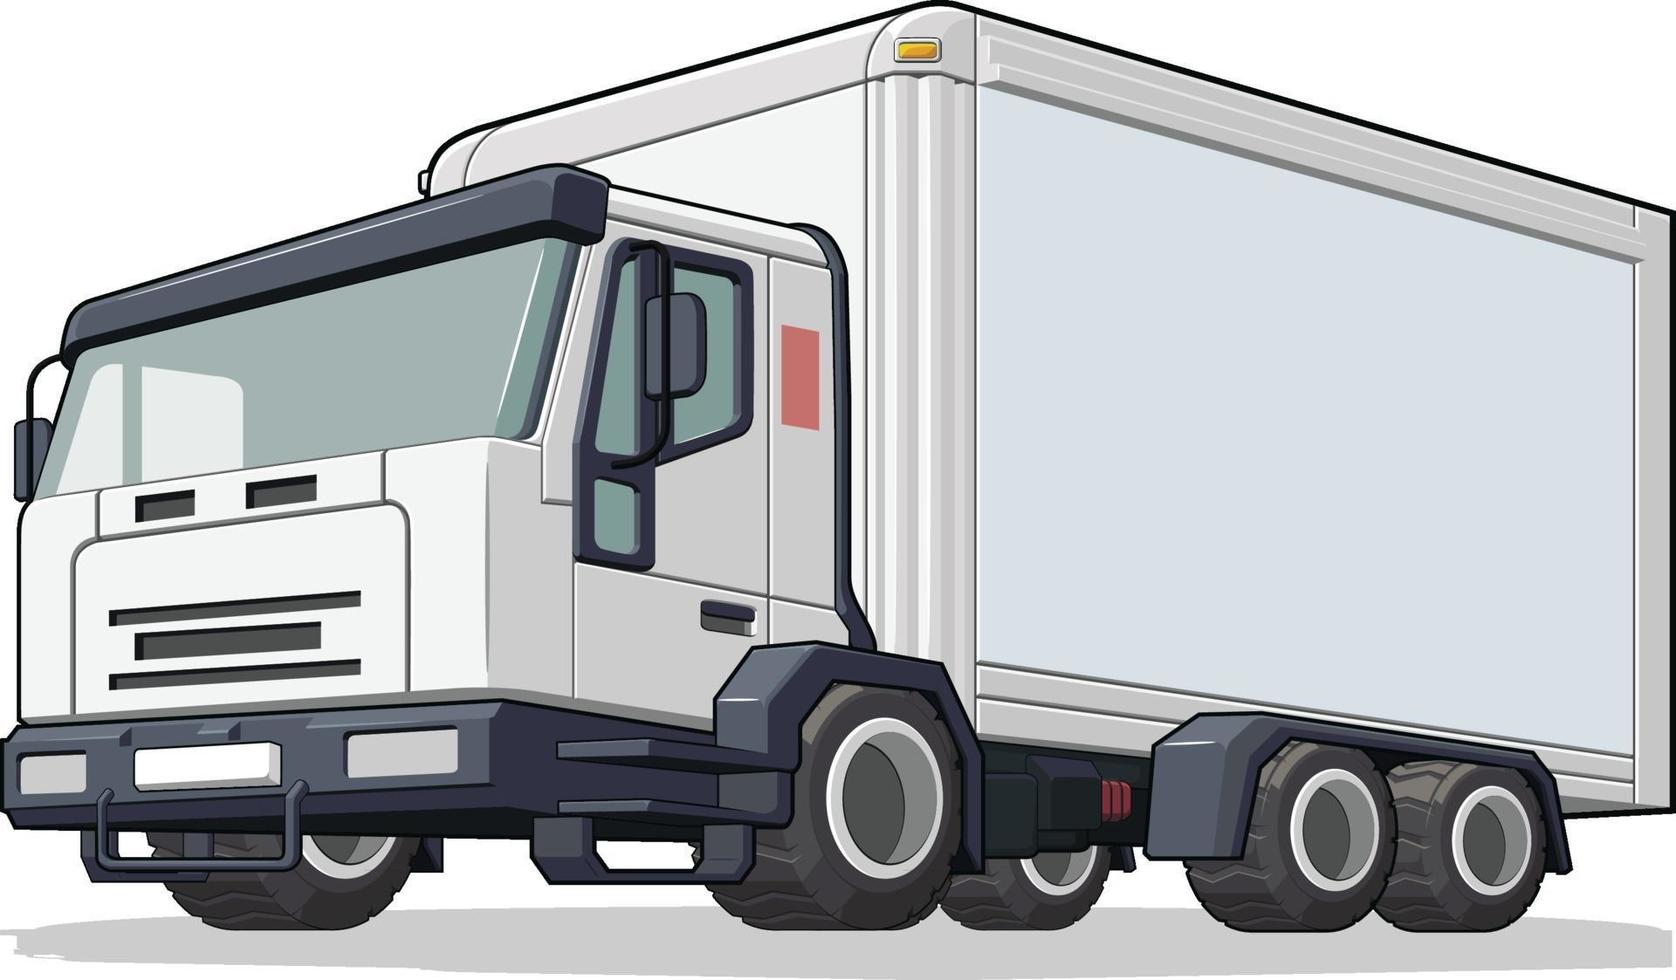 Cargo Box Truck Delivery Van Distribution Vehicle Cartoon vector